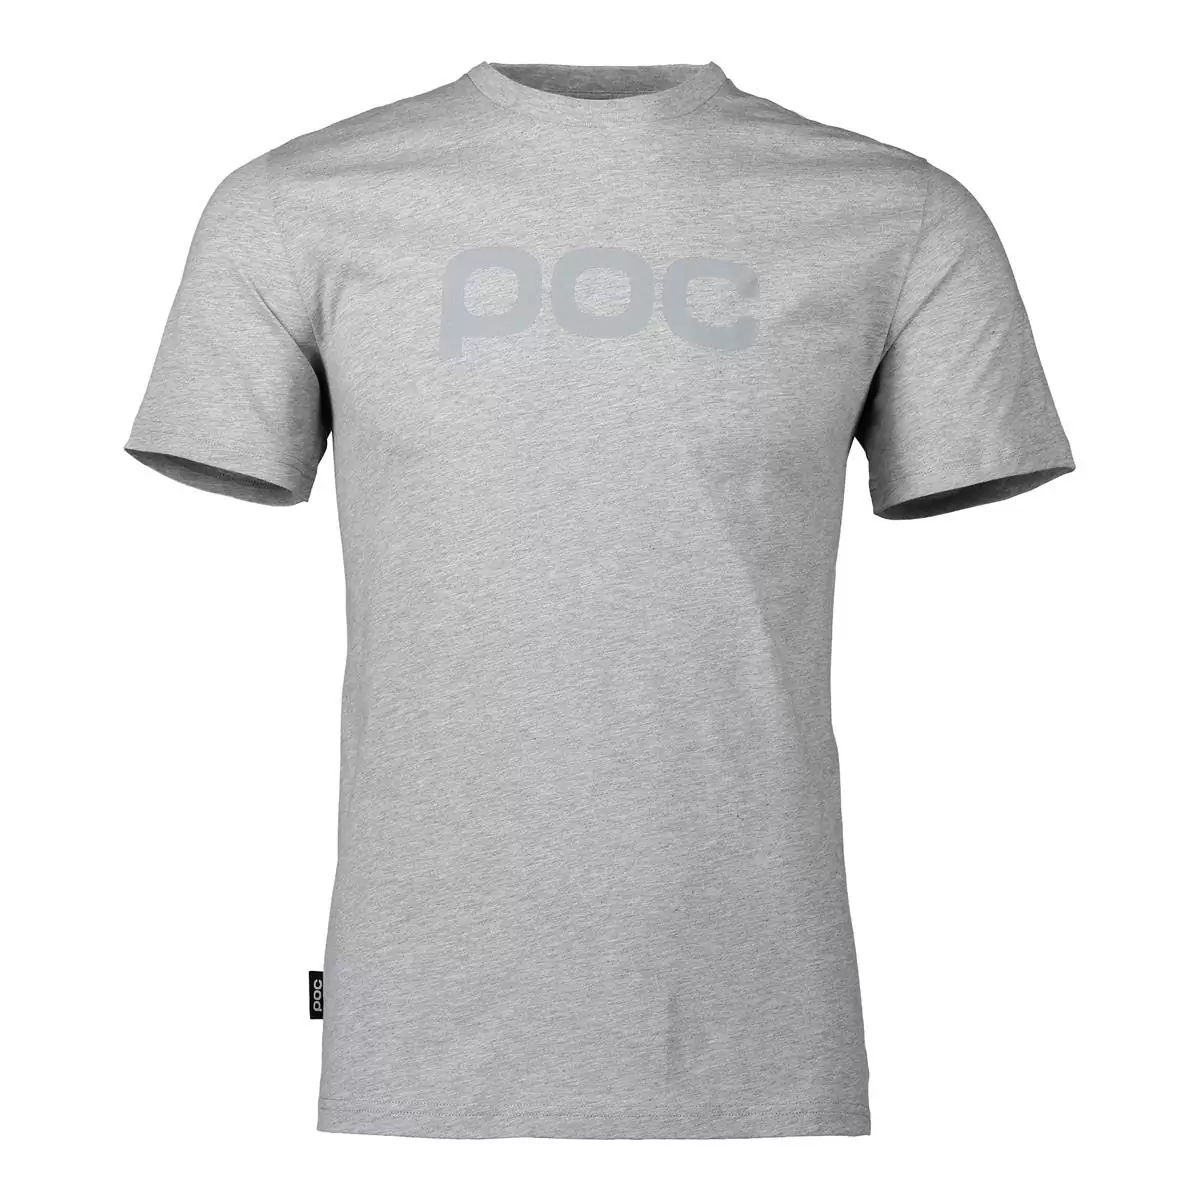 Kurzarm T-Shirt Grau Größe XL - image